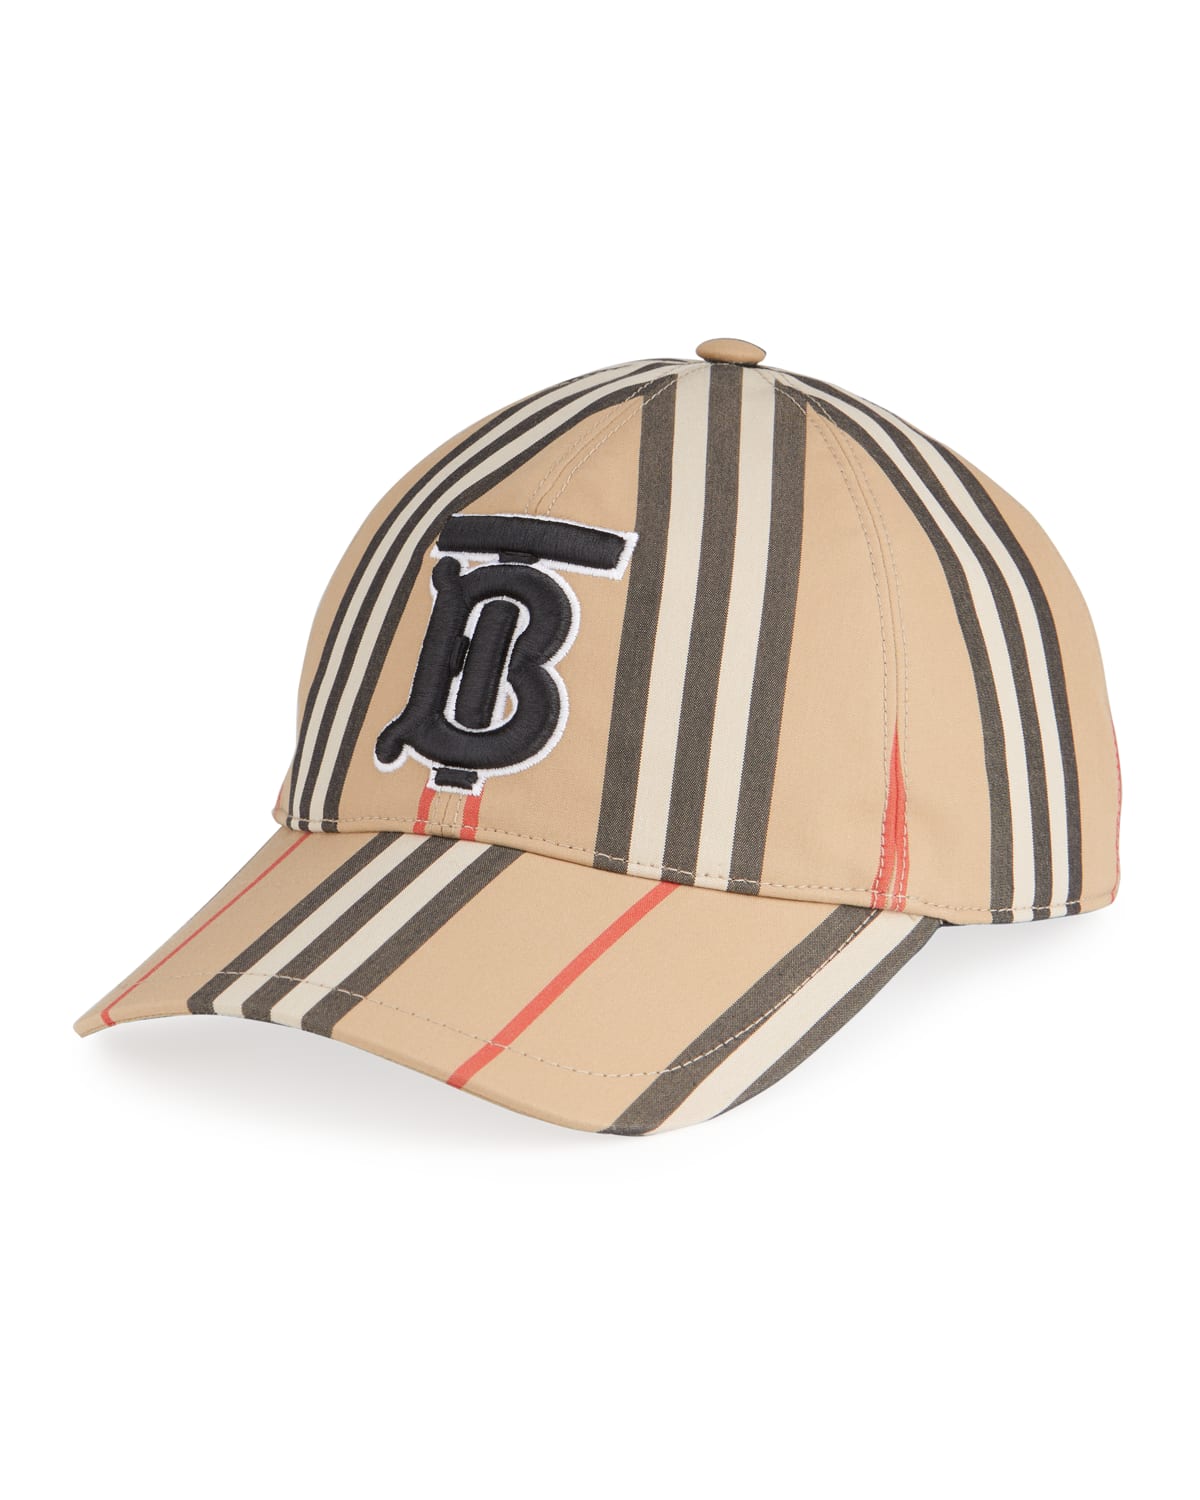 Burberry TB Check Baseball Cap | Neiman Marcus